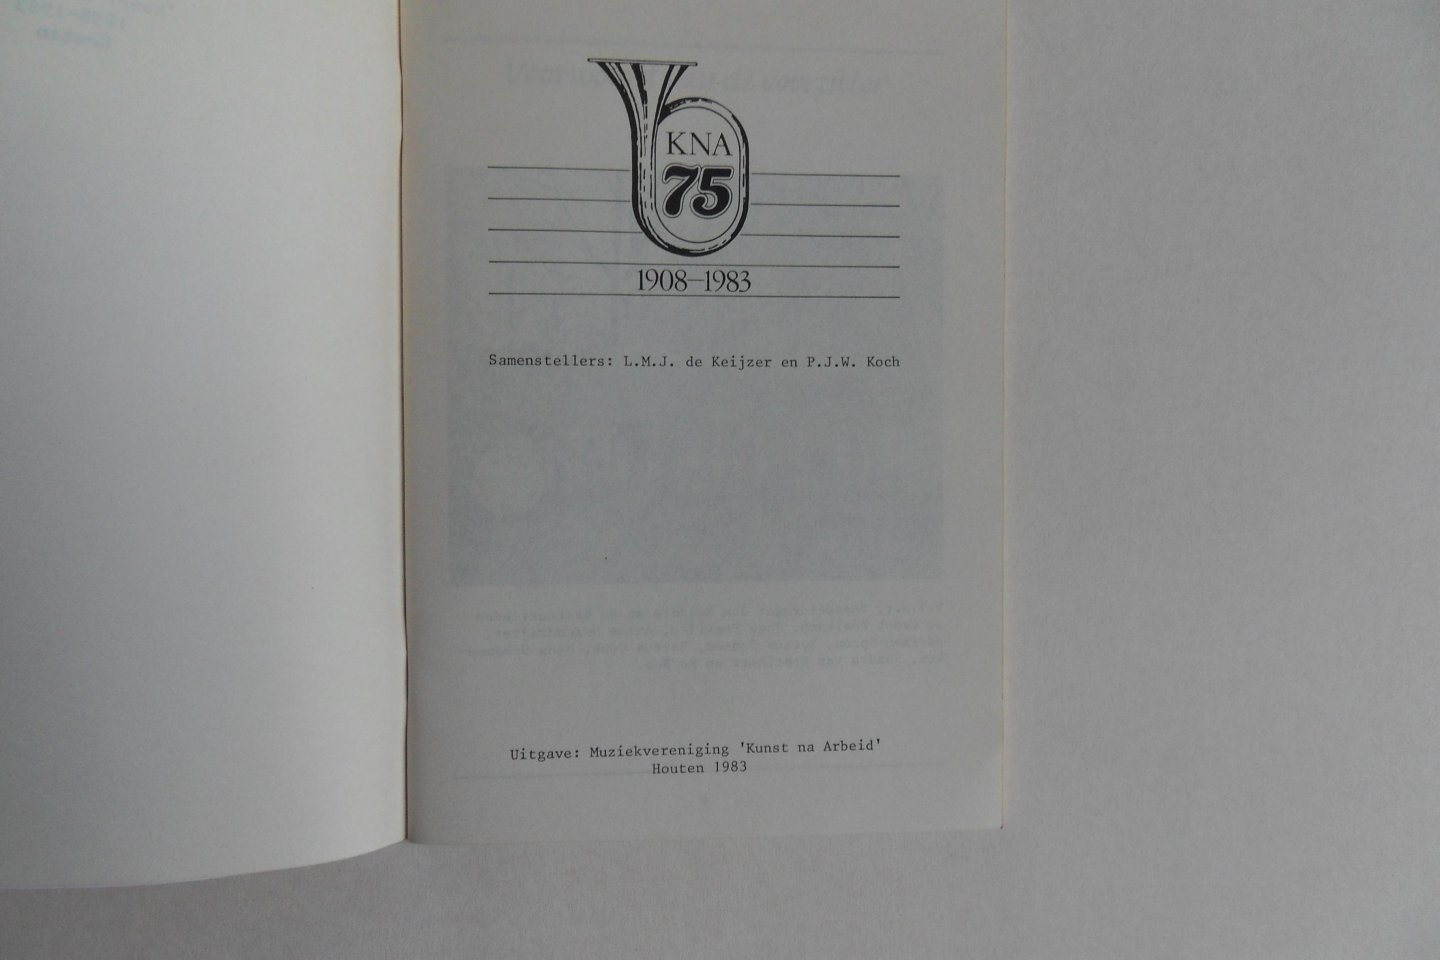 Keijzer, L.M.J. de; Koch, P.J.W. (samenstellers). - 75 Jaar Muziekvereniging "Kunst na Arbeid", 1908 - 1983, Houten.